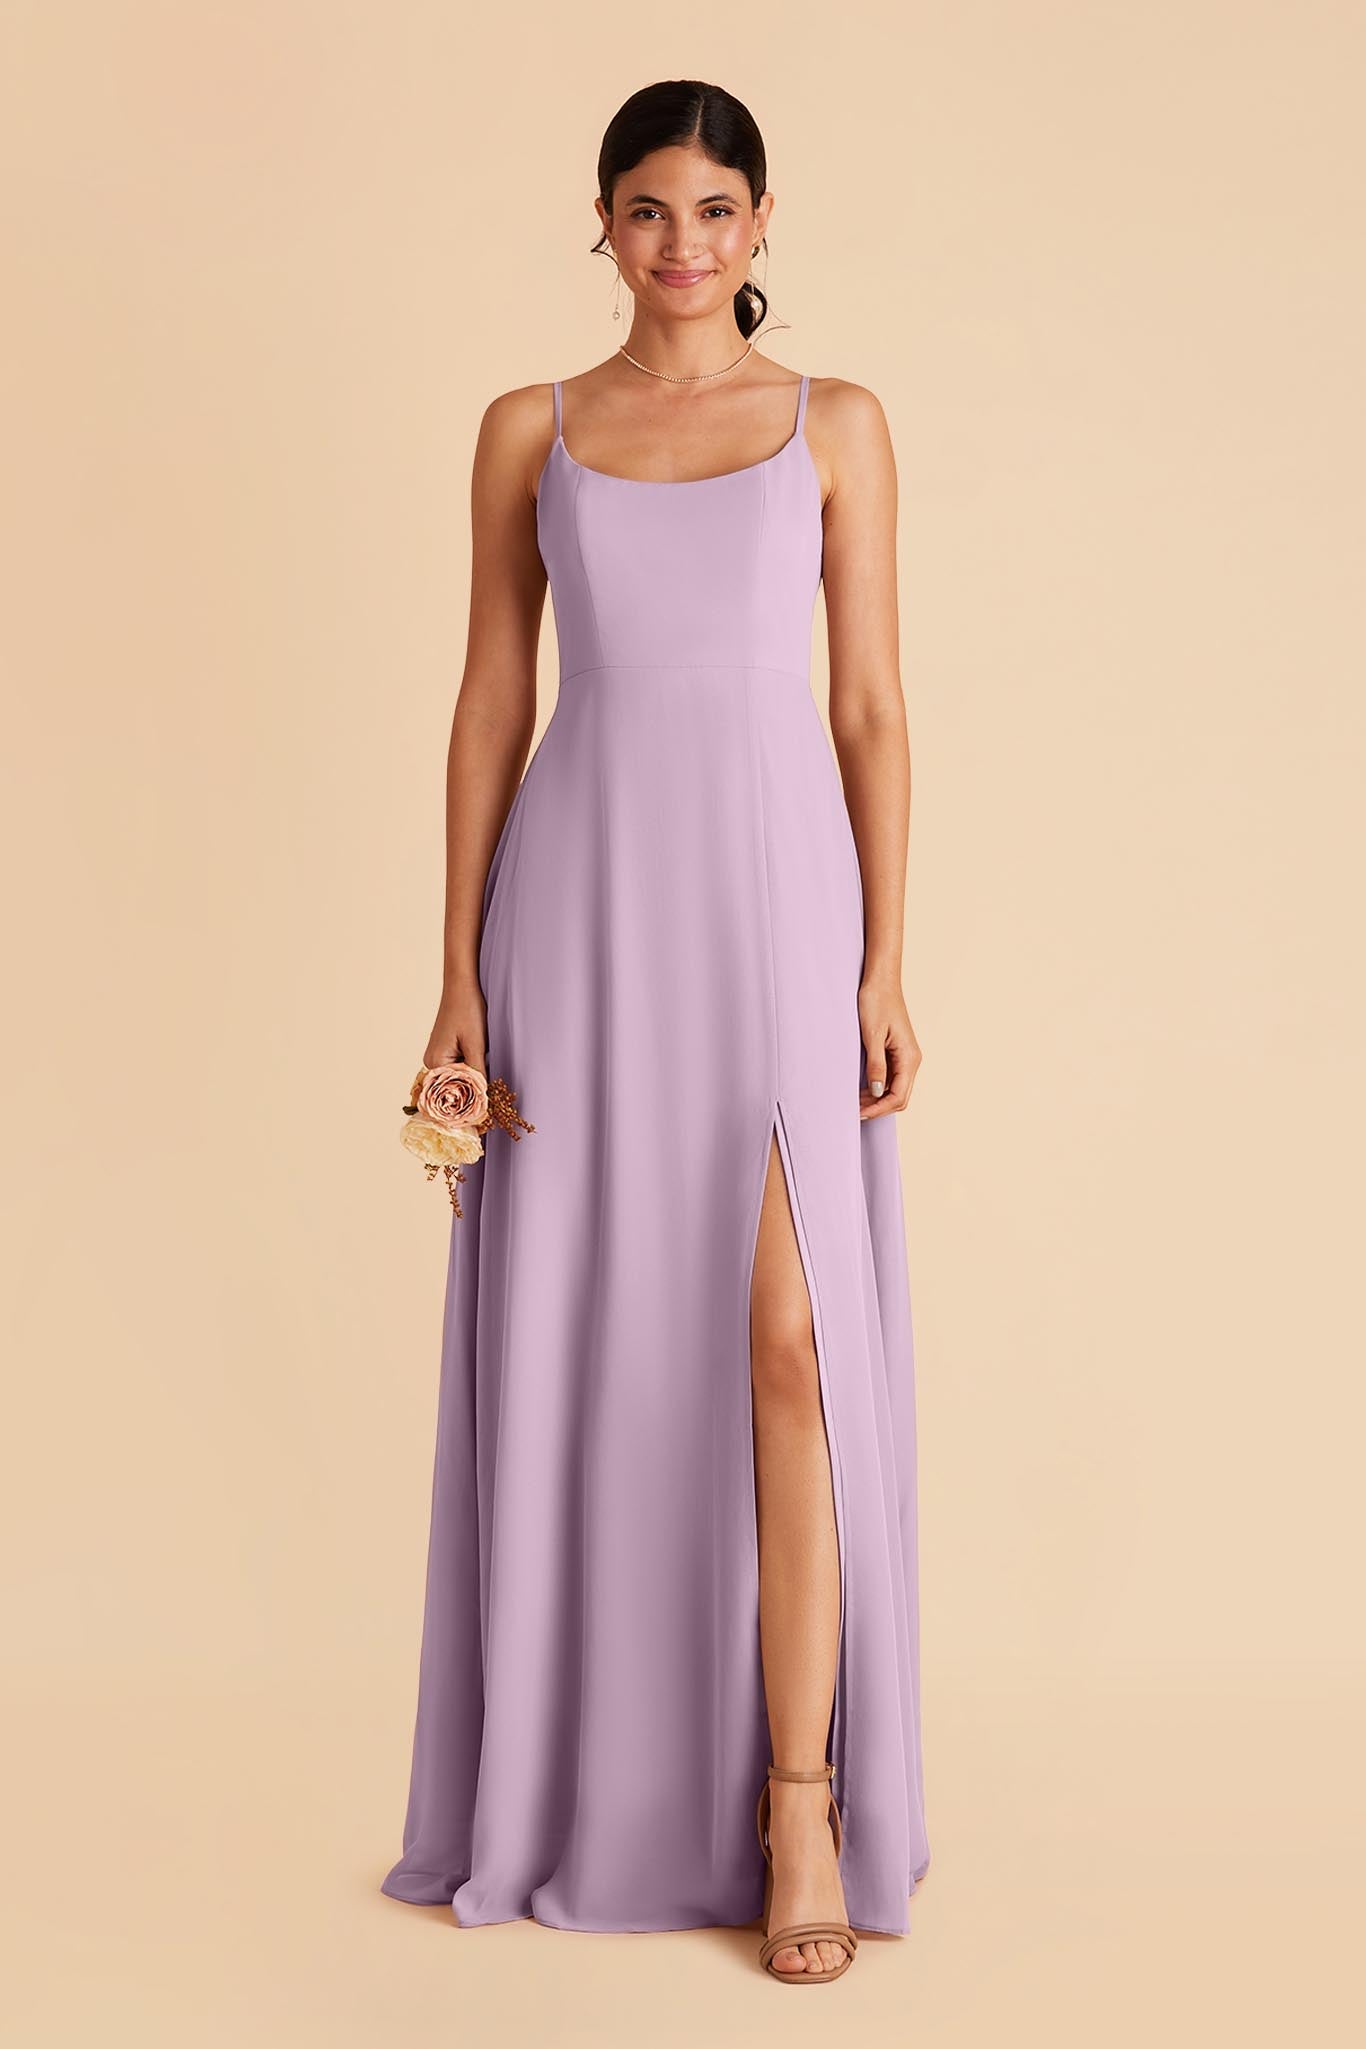 Lavender Amy Chiffon Dress by Birdy Grey